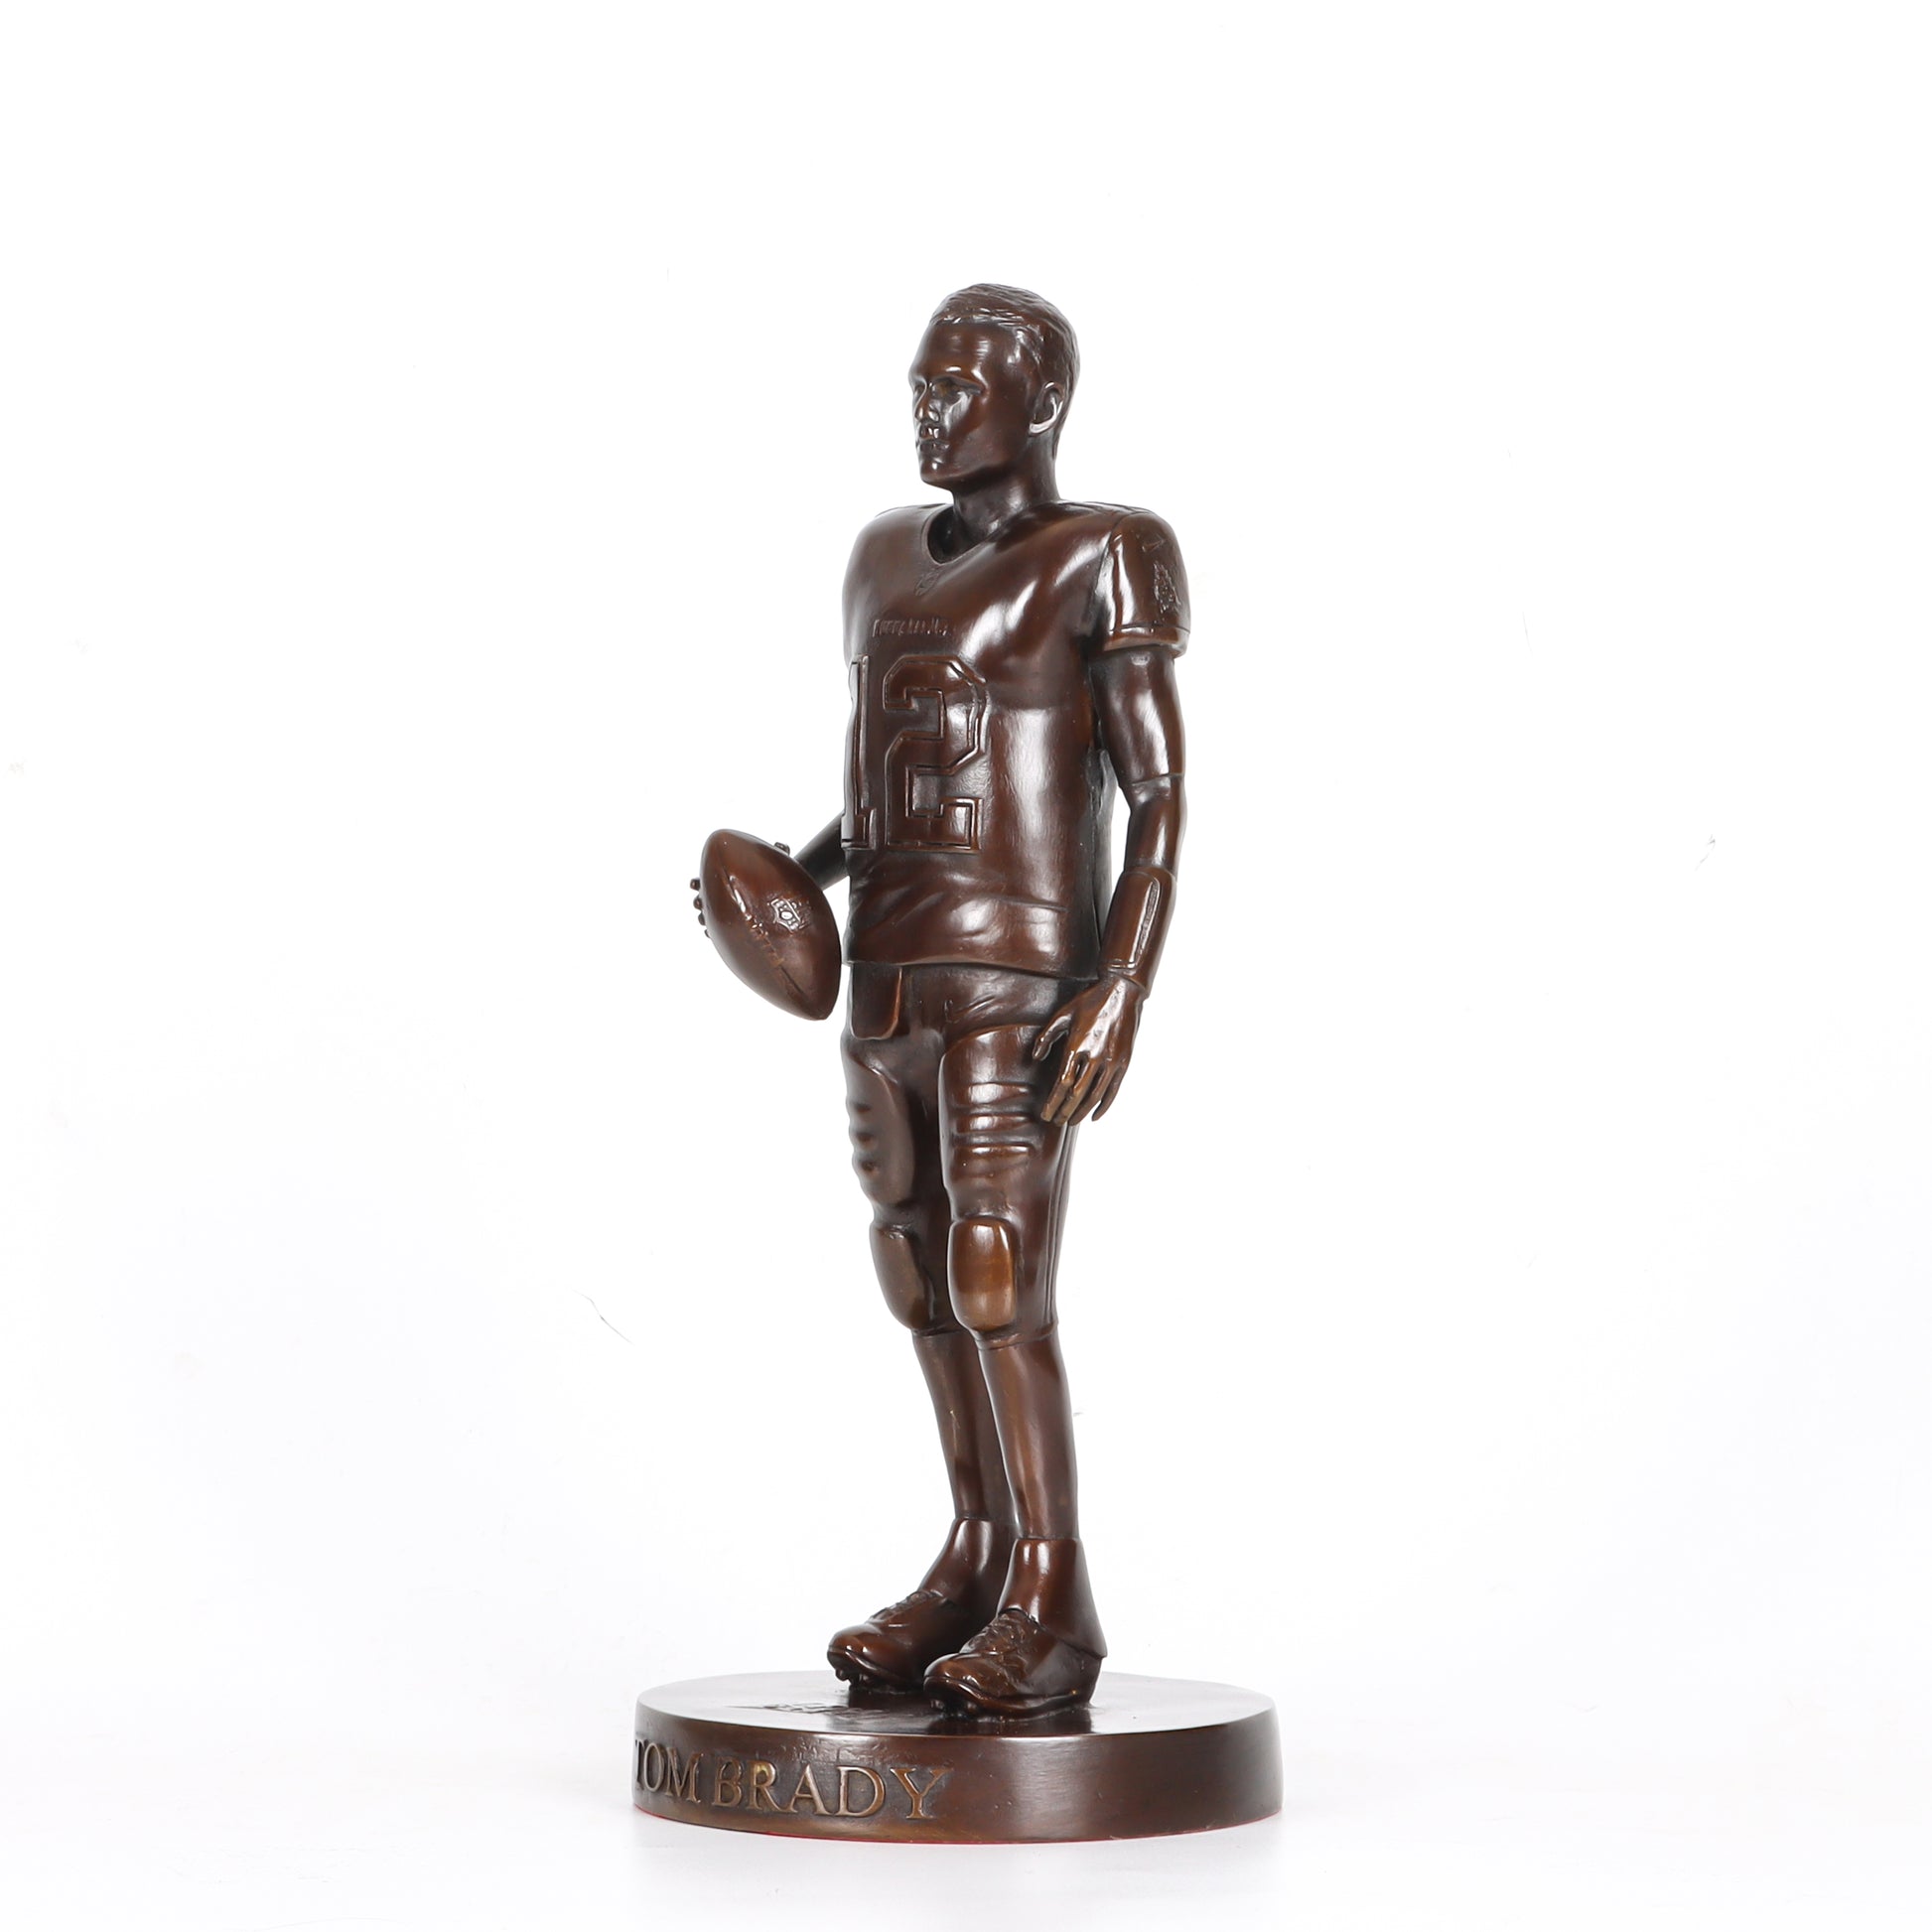 Tom Brady Statue Figurine 4